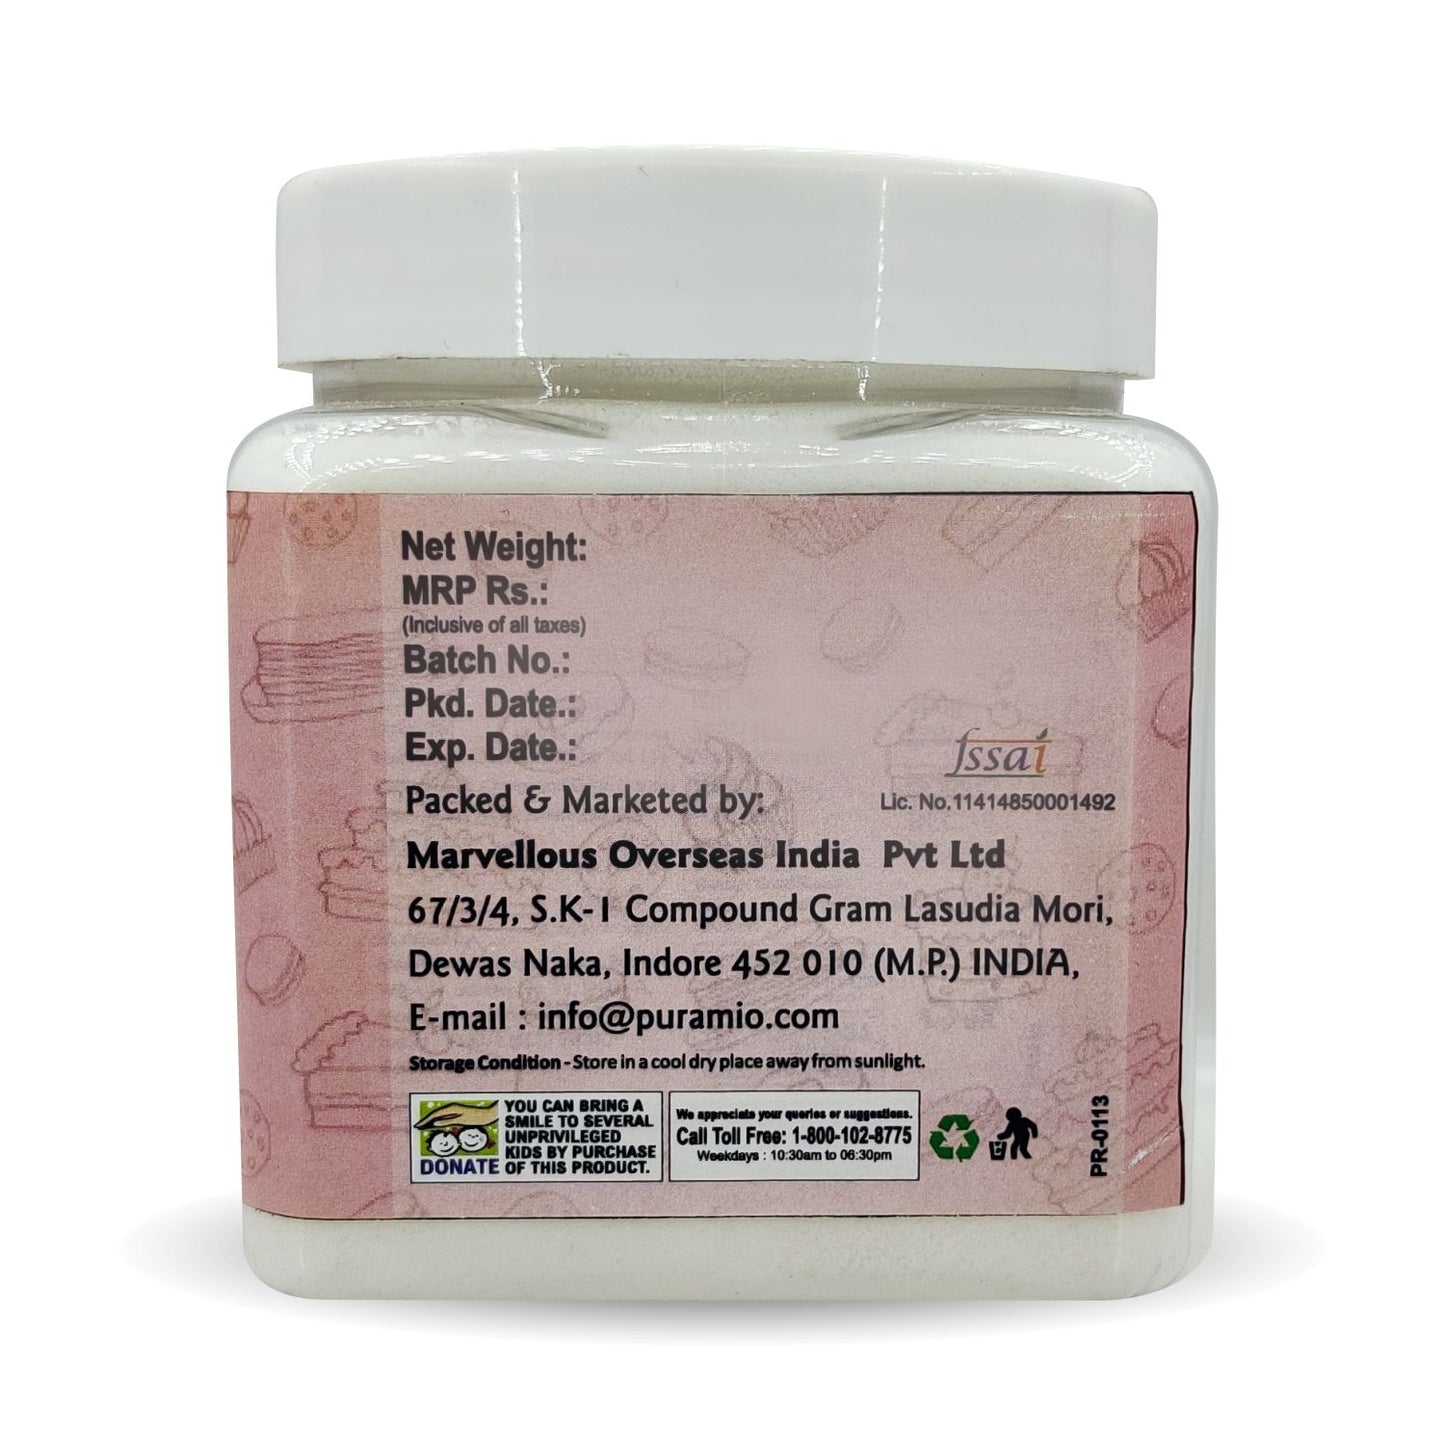 Puramio GMS Powder (Glycerol Monostearate)